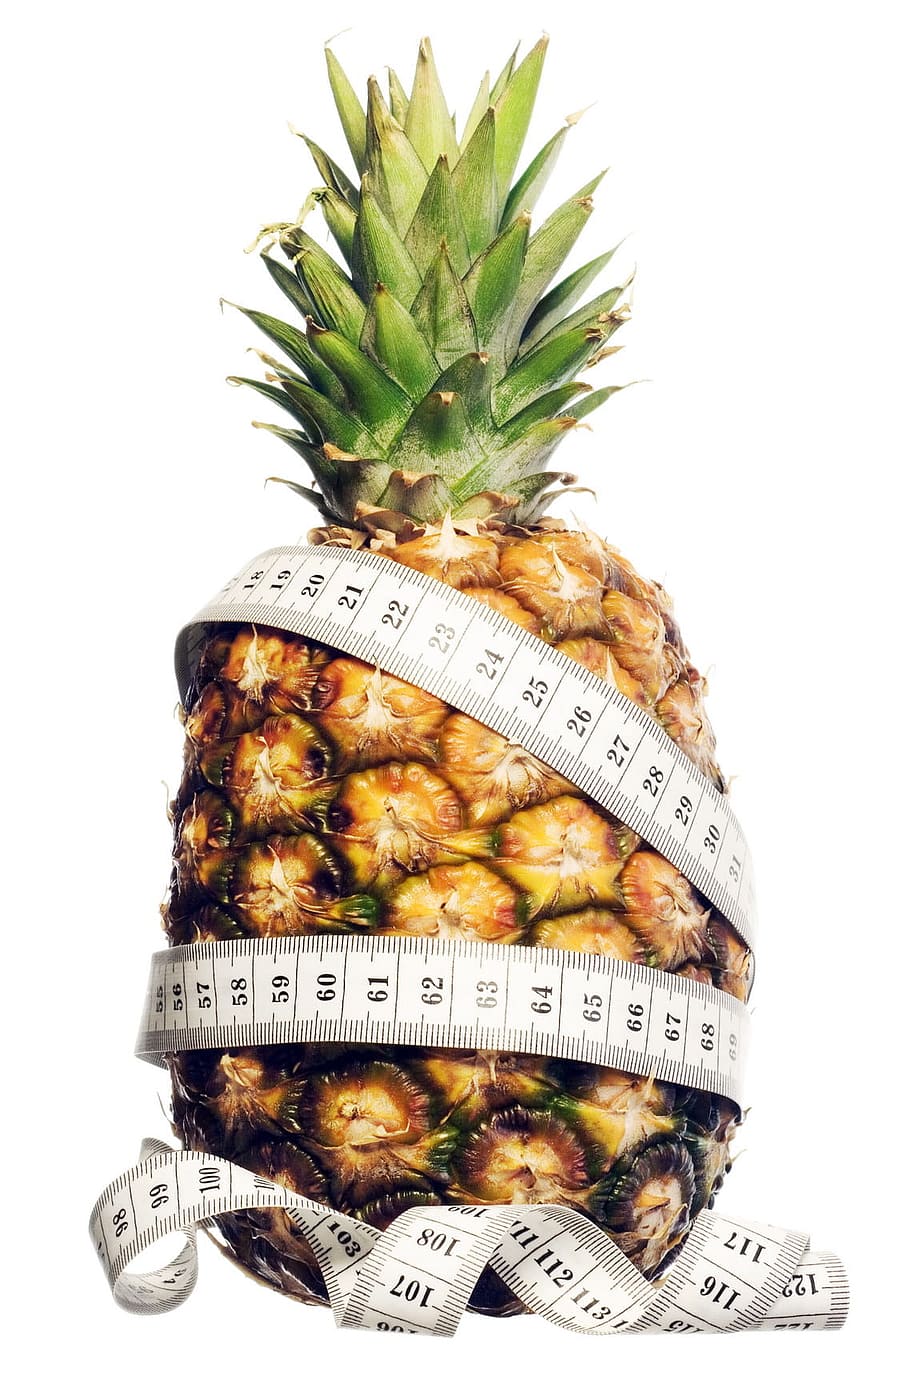 ananas, centimeter, length, measure, measurement, meter, ruler, tape, background, citrus